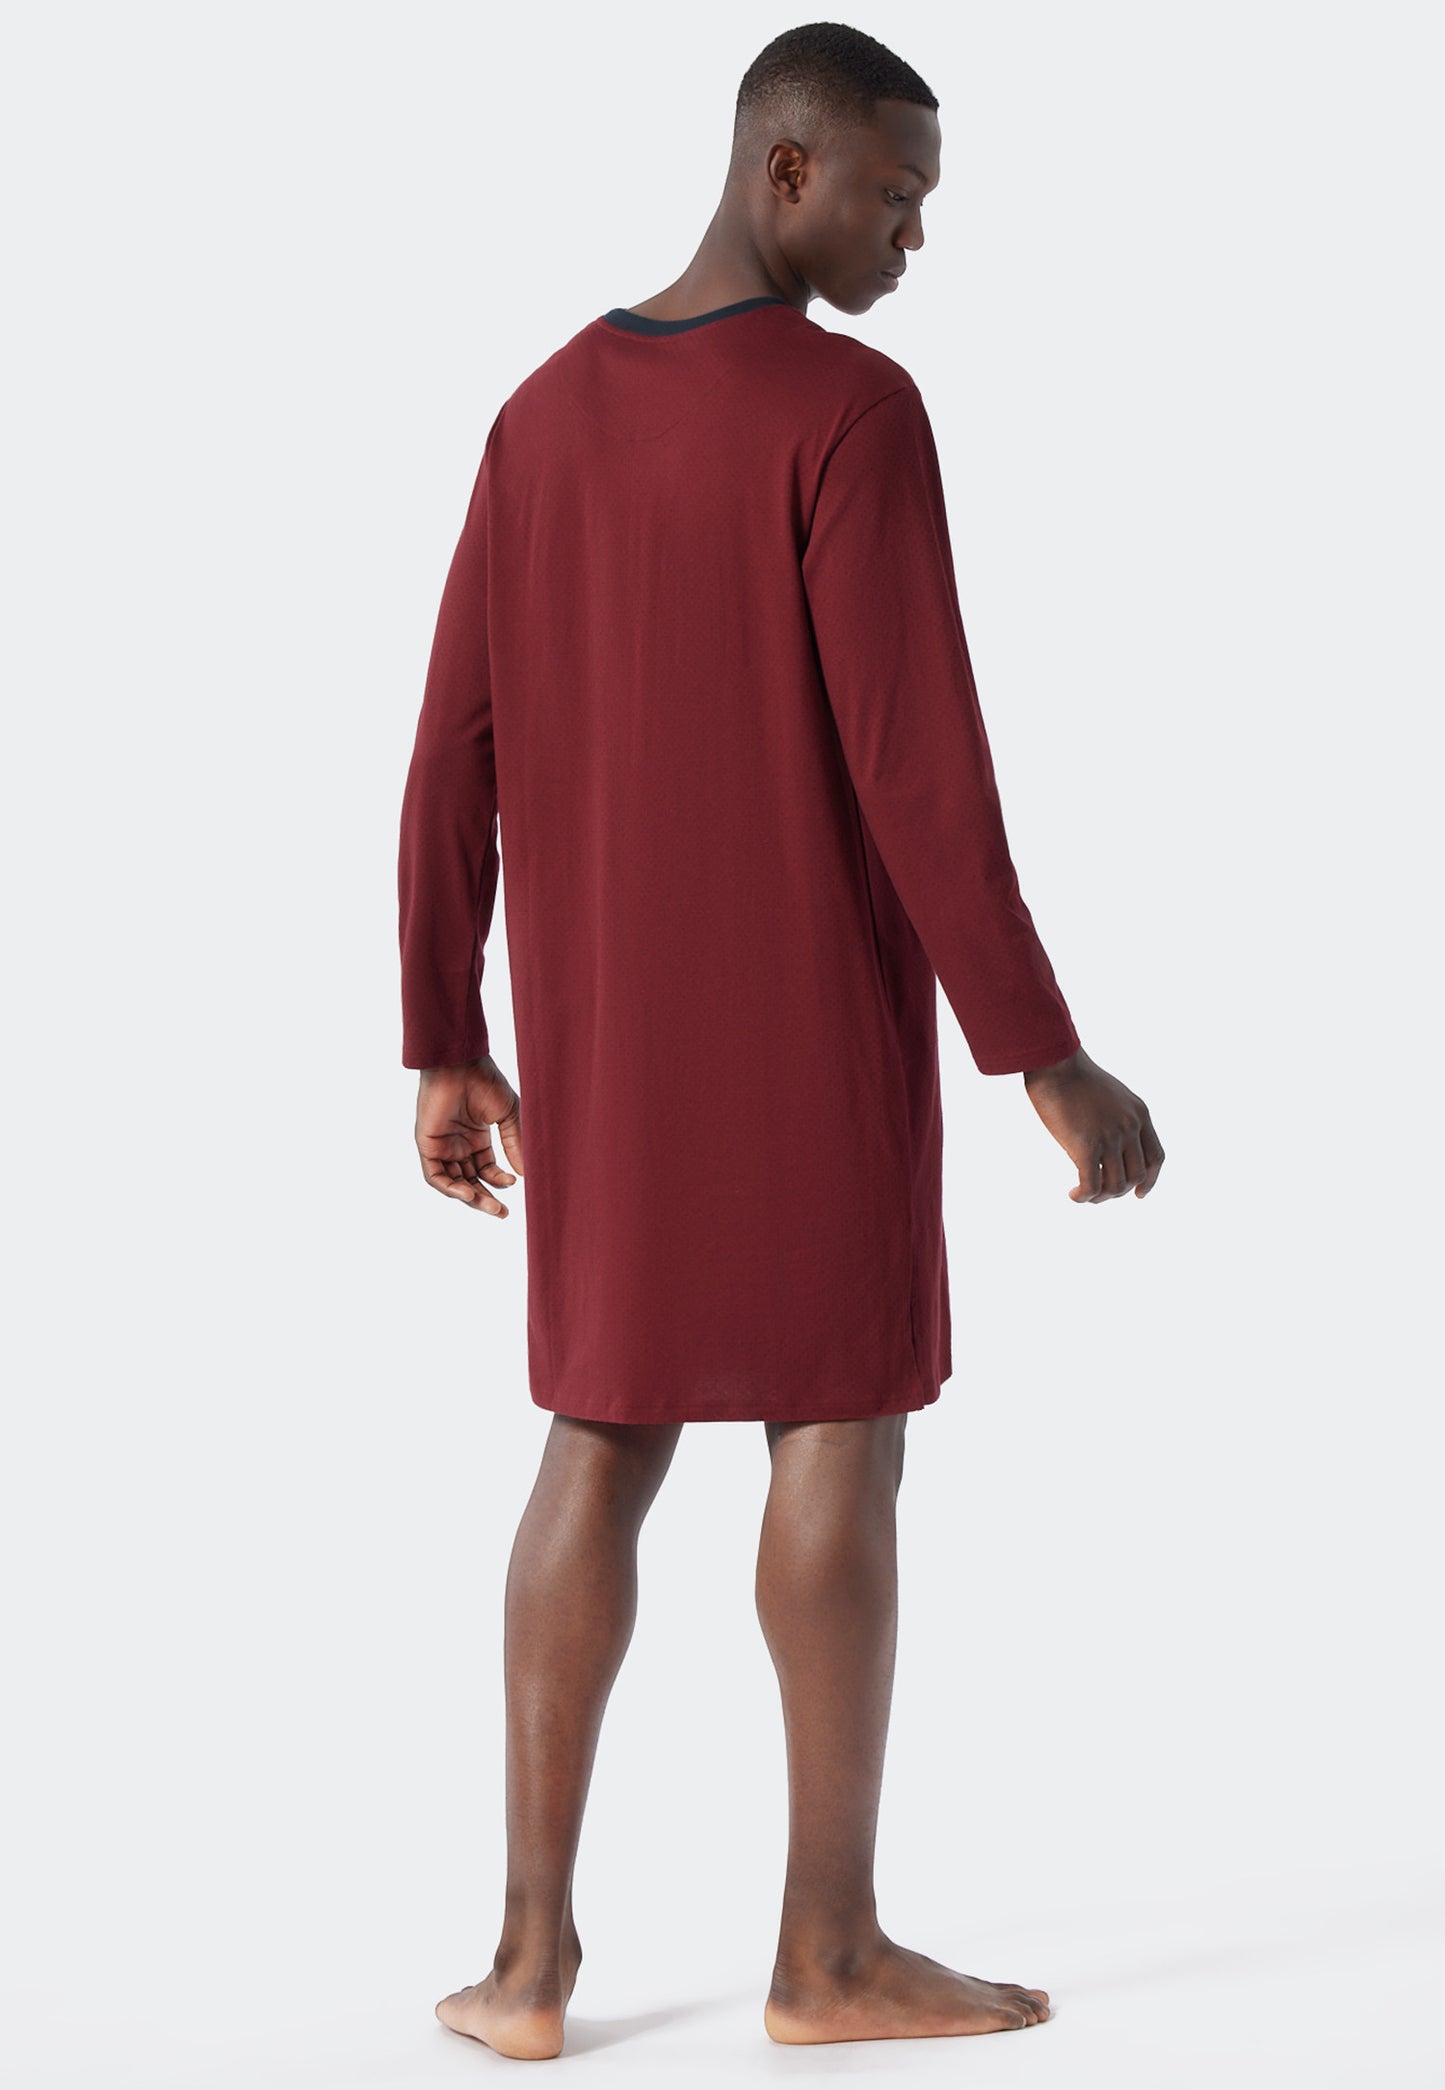 Sleep shirt long-sleeved V-neck patterned burgundy/dark blue - Essentials Nightwear